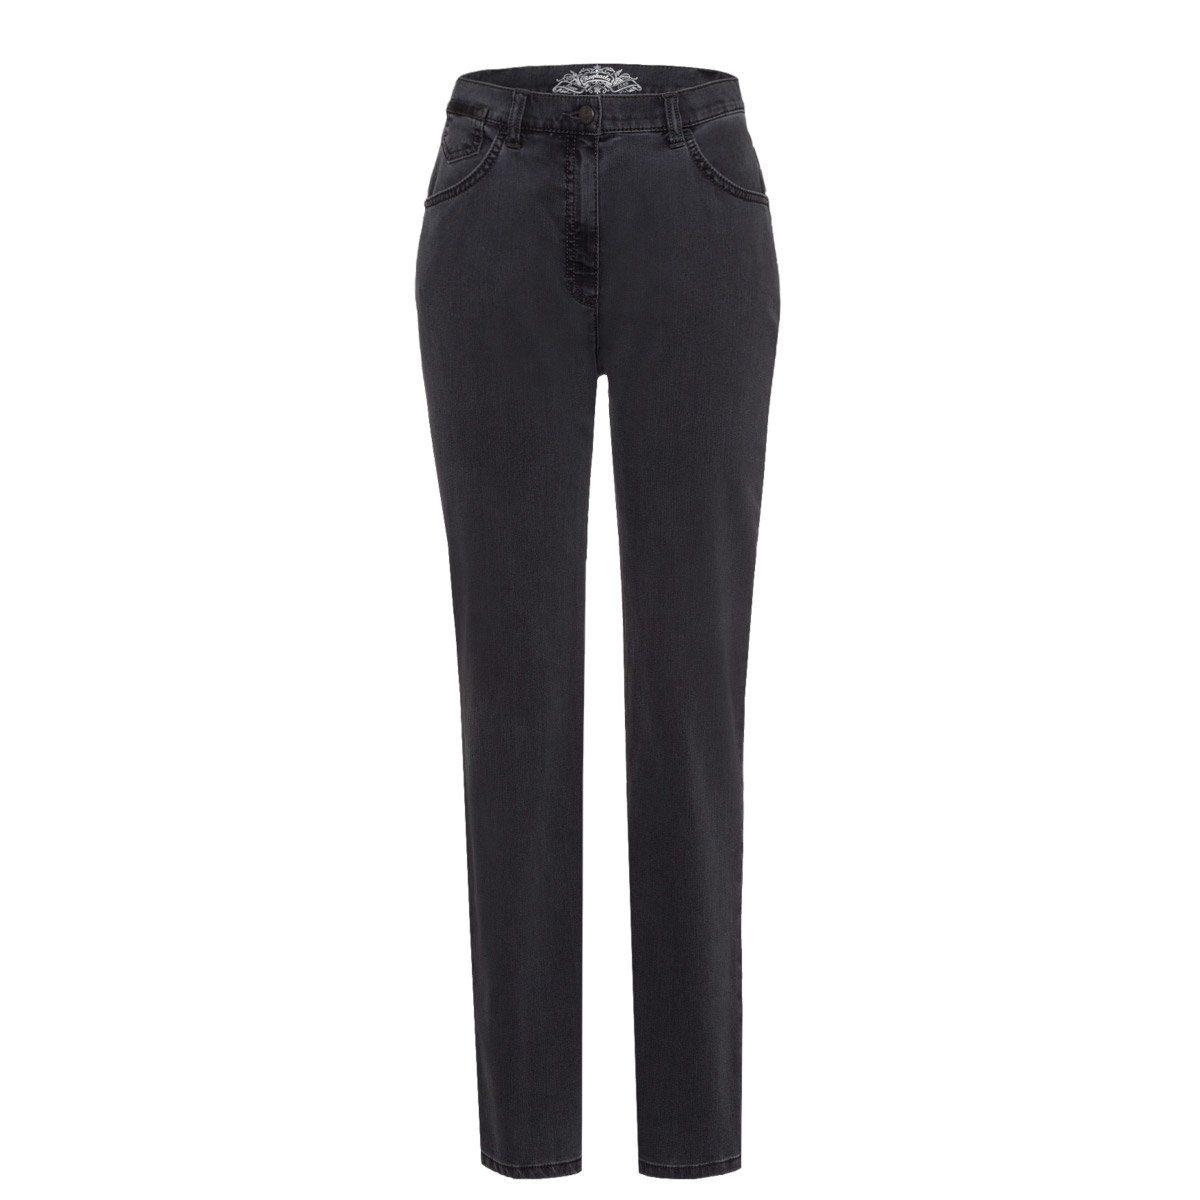 RAPHAELA by BRAX 5-Pocket-Jeans Corry Fay Comfort Plus COMFORT FIT anthrazit (08)